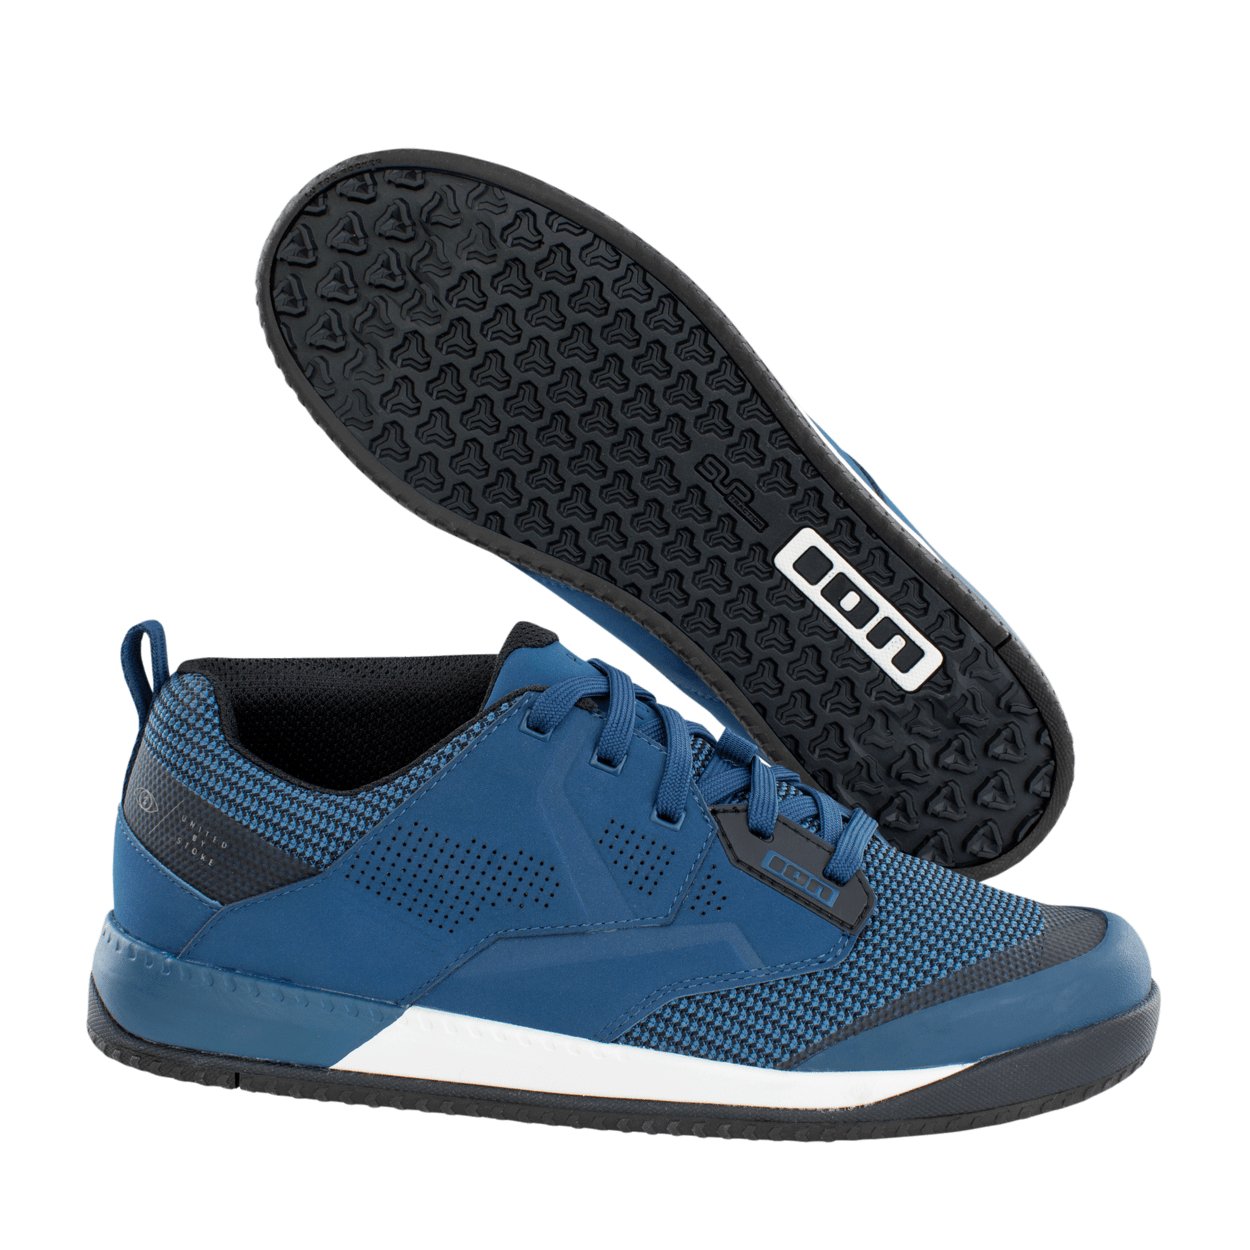 ION MTB Flat Pedal Shoes Scrub Amp 2024 - Worthing Watersports - 9008415907663 - Footwear - ION Bike